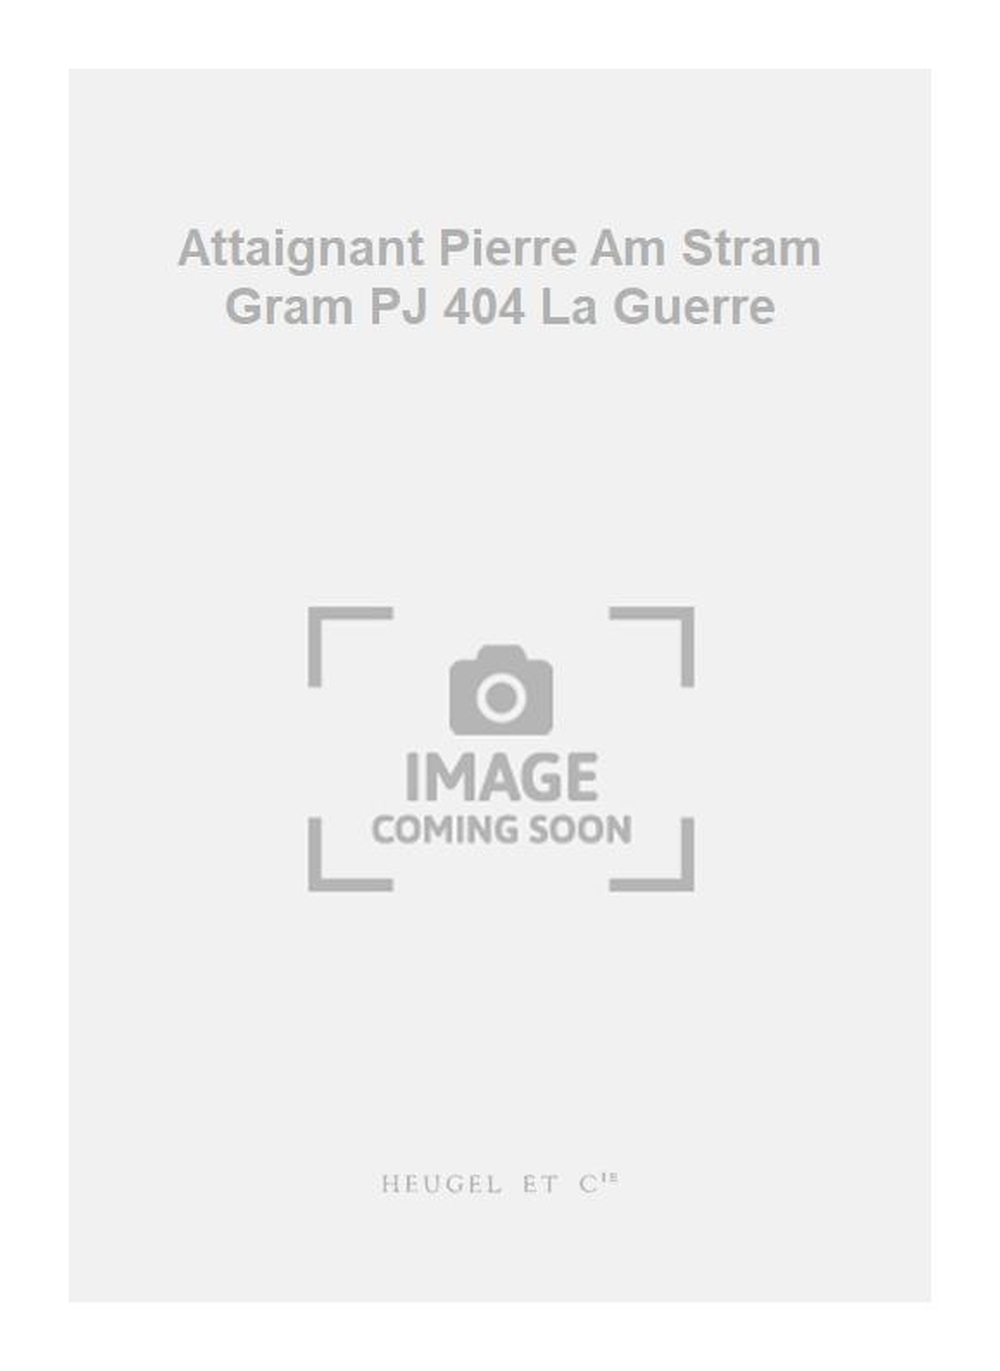 Pierre Attaingnant: Attaignant Pierre Am Stram Gram PJ 404 La Guerre